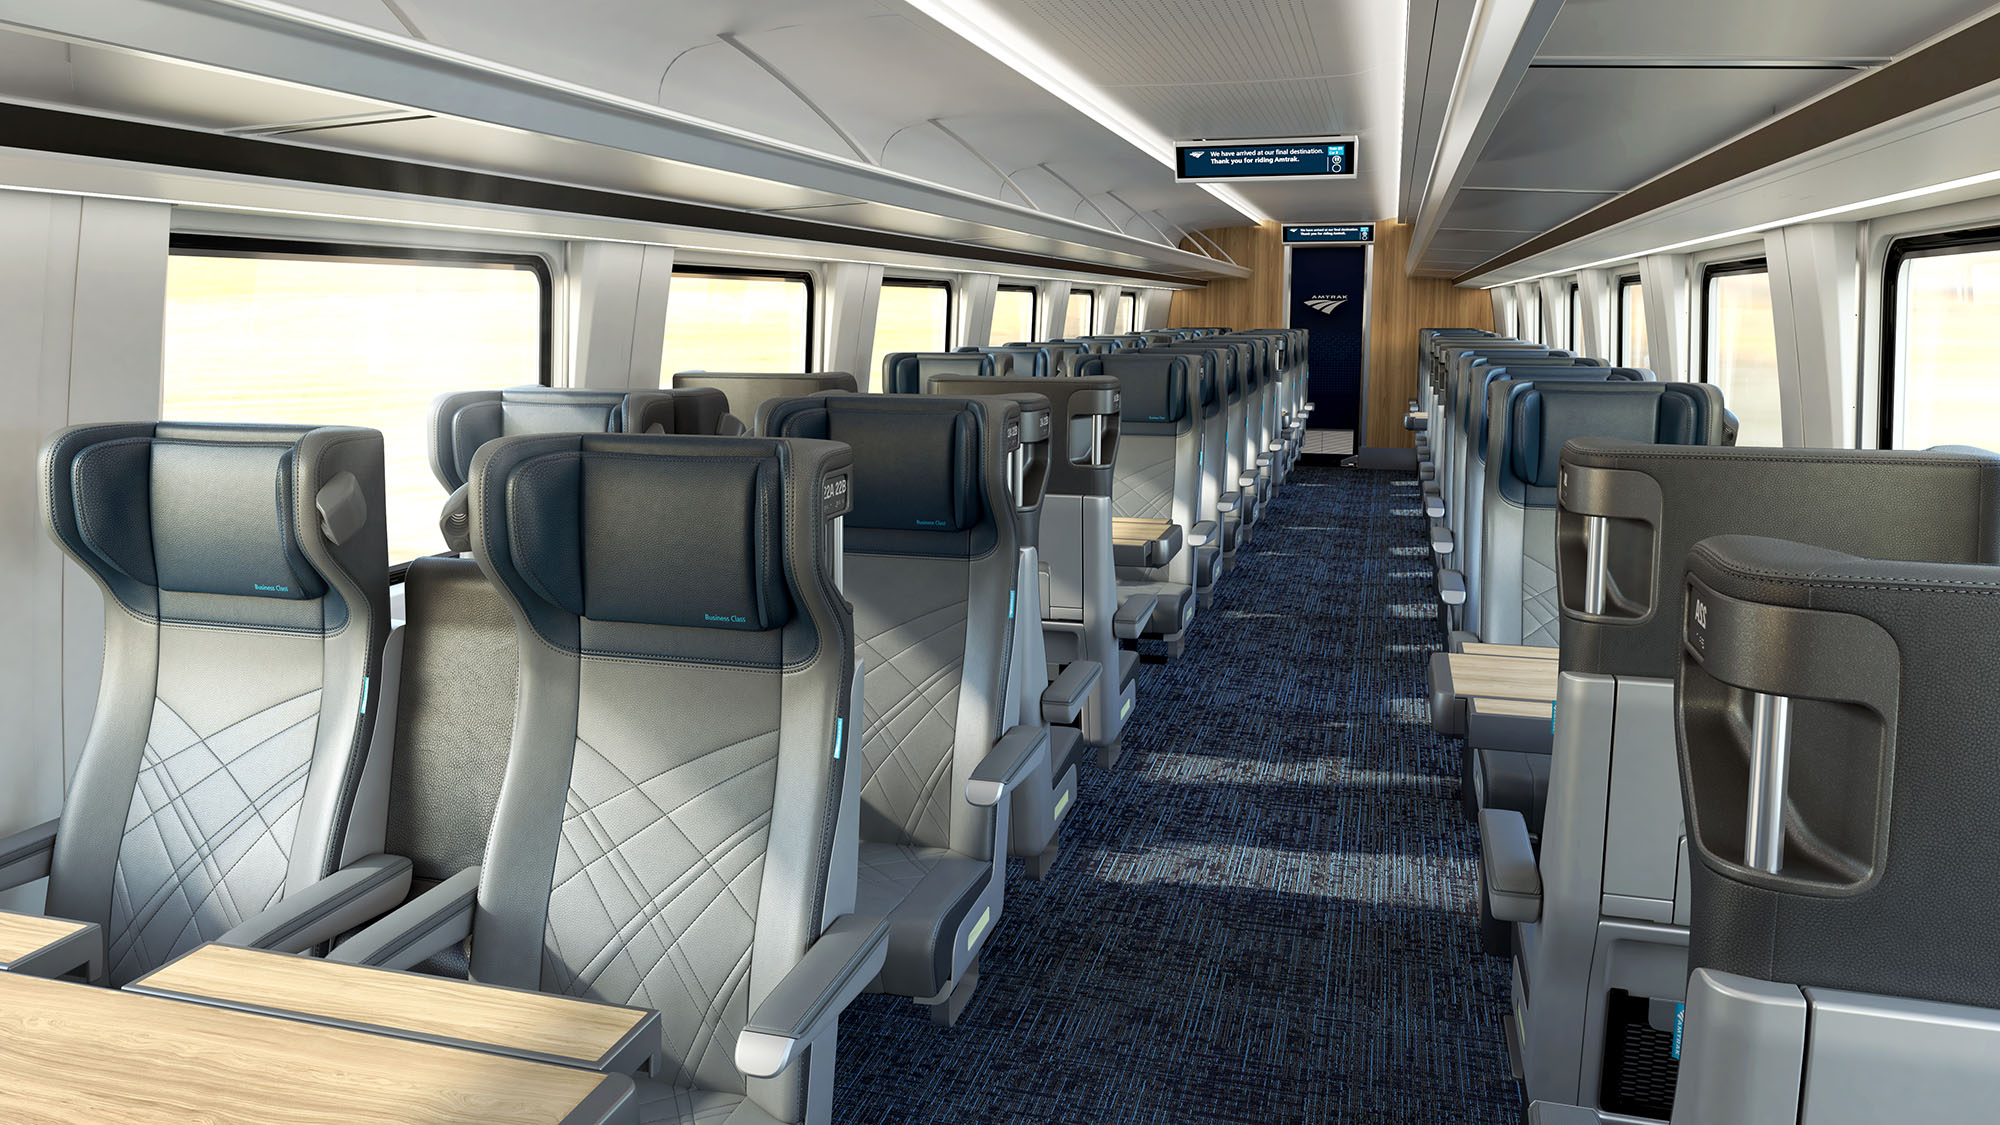 Rendu conceptuel des trains interurbains d'Amtrak